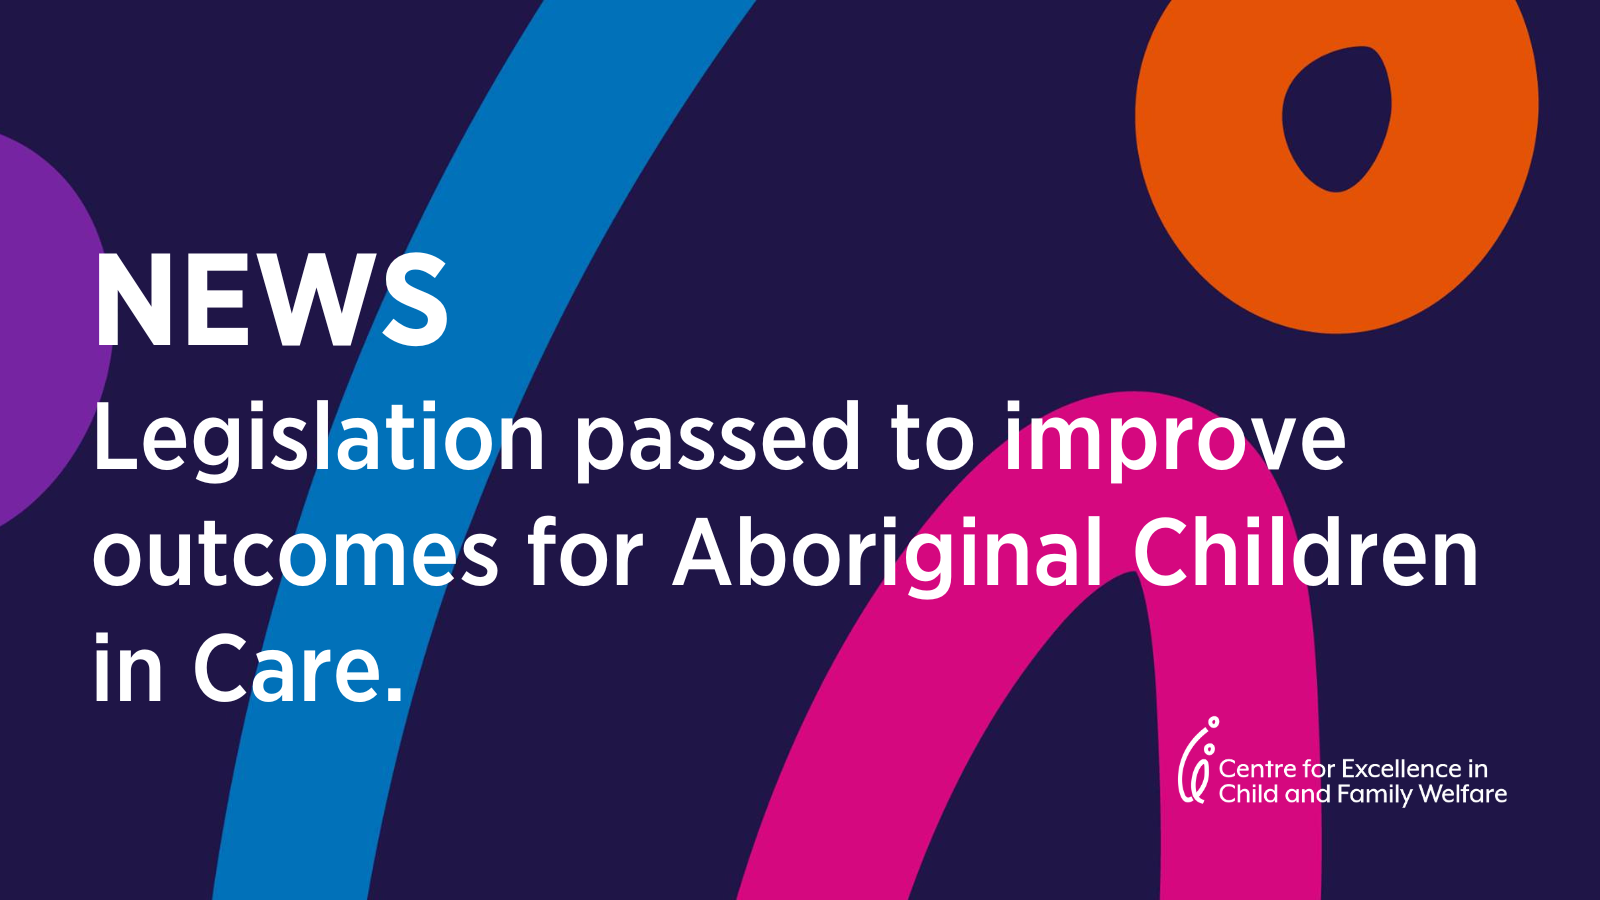 NEWS - Legislation passed to improve outcomes for Aboriginal Children in Care.